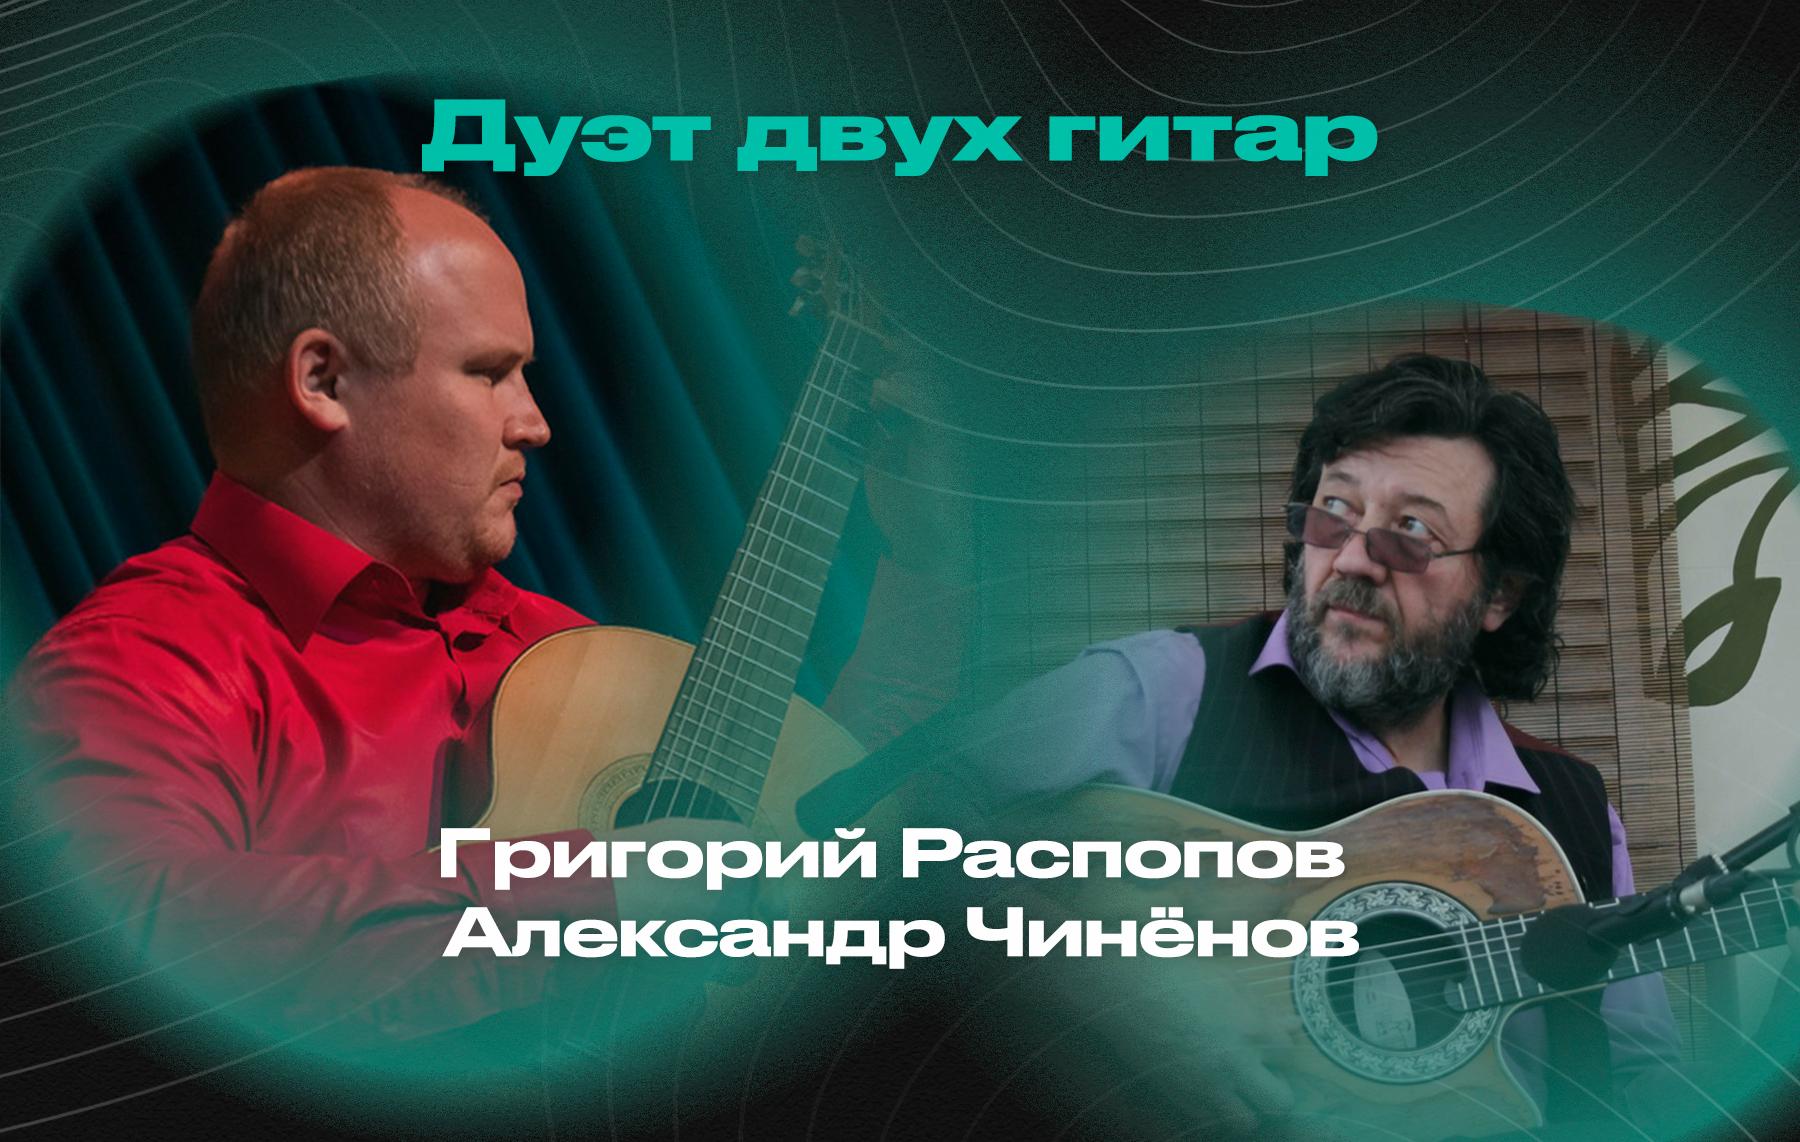 Дуэт двух гитар – Григорий Распопов (гитара) и Александр Чинёнов (гитара)